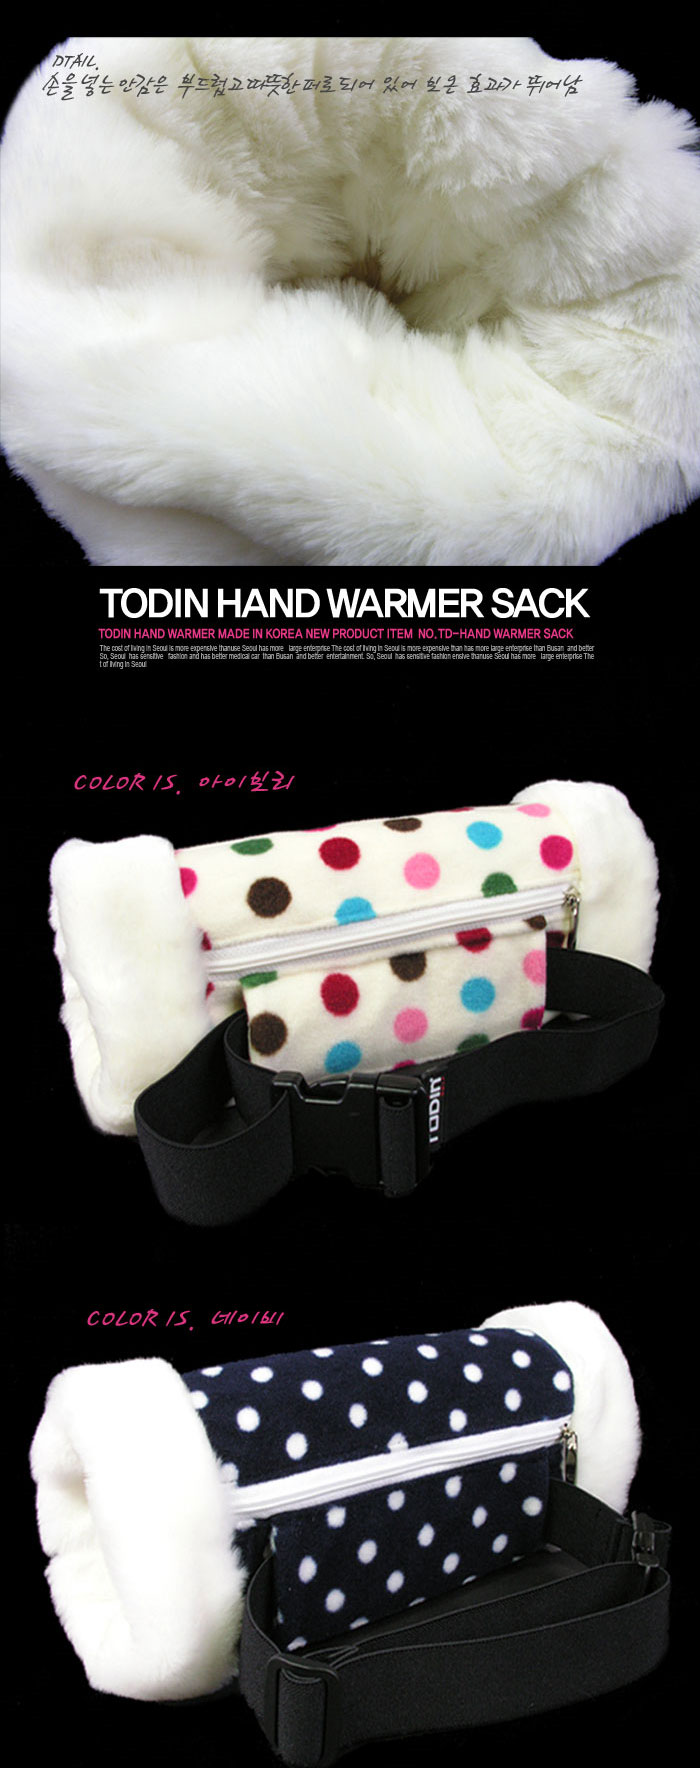 eodin-hand-warmer-sack_02_174812.jpg